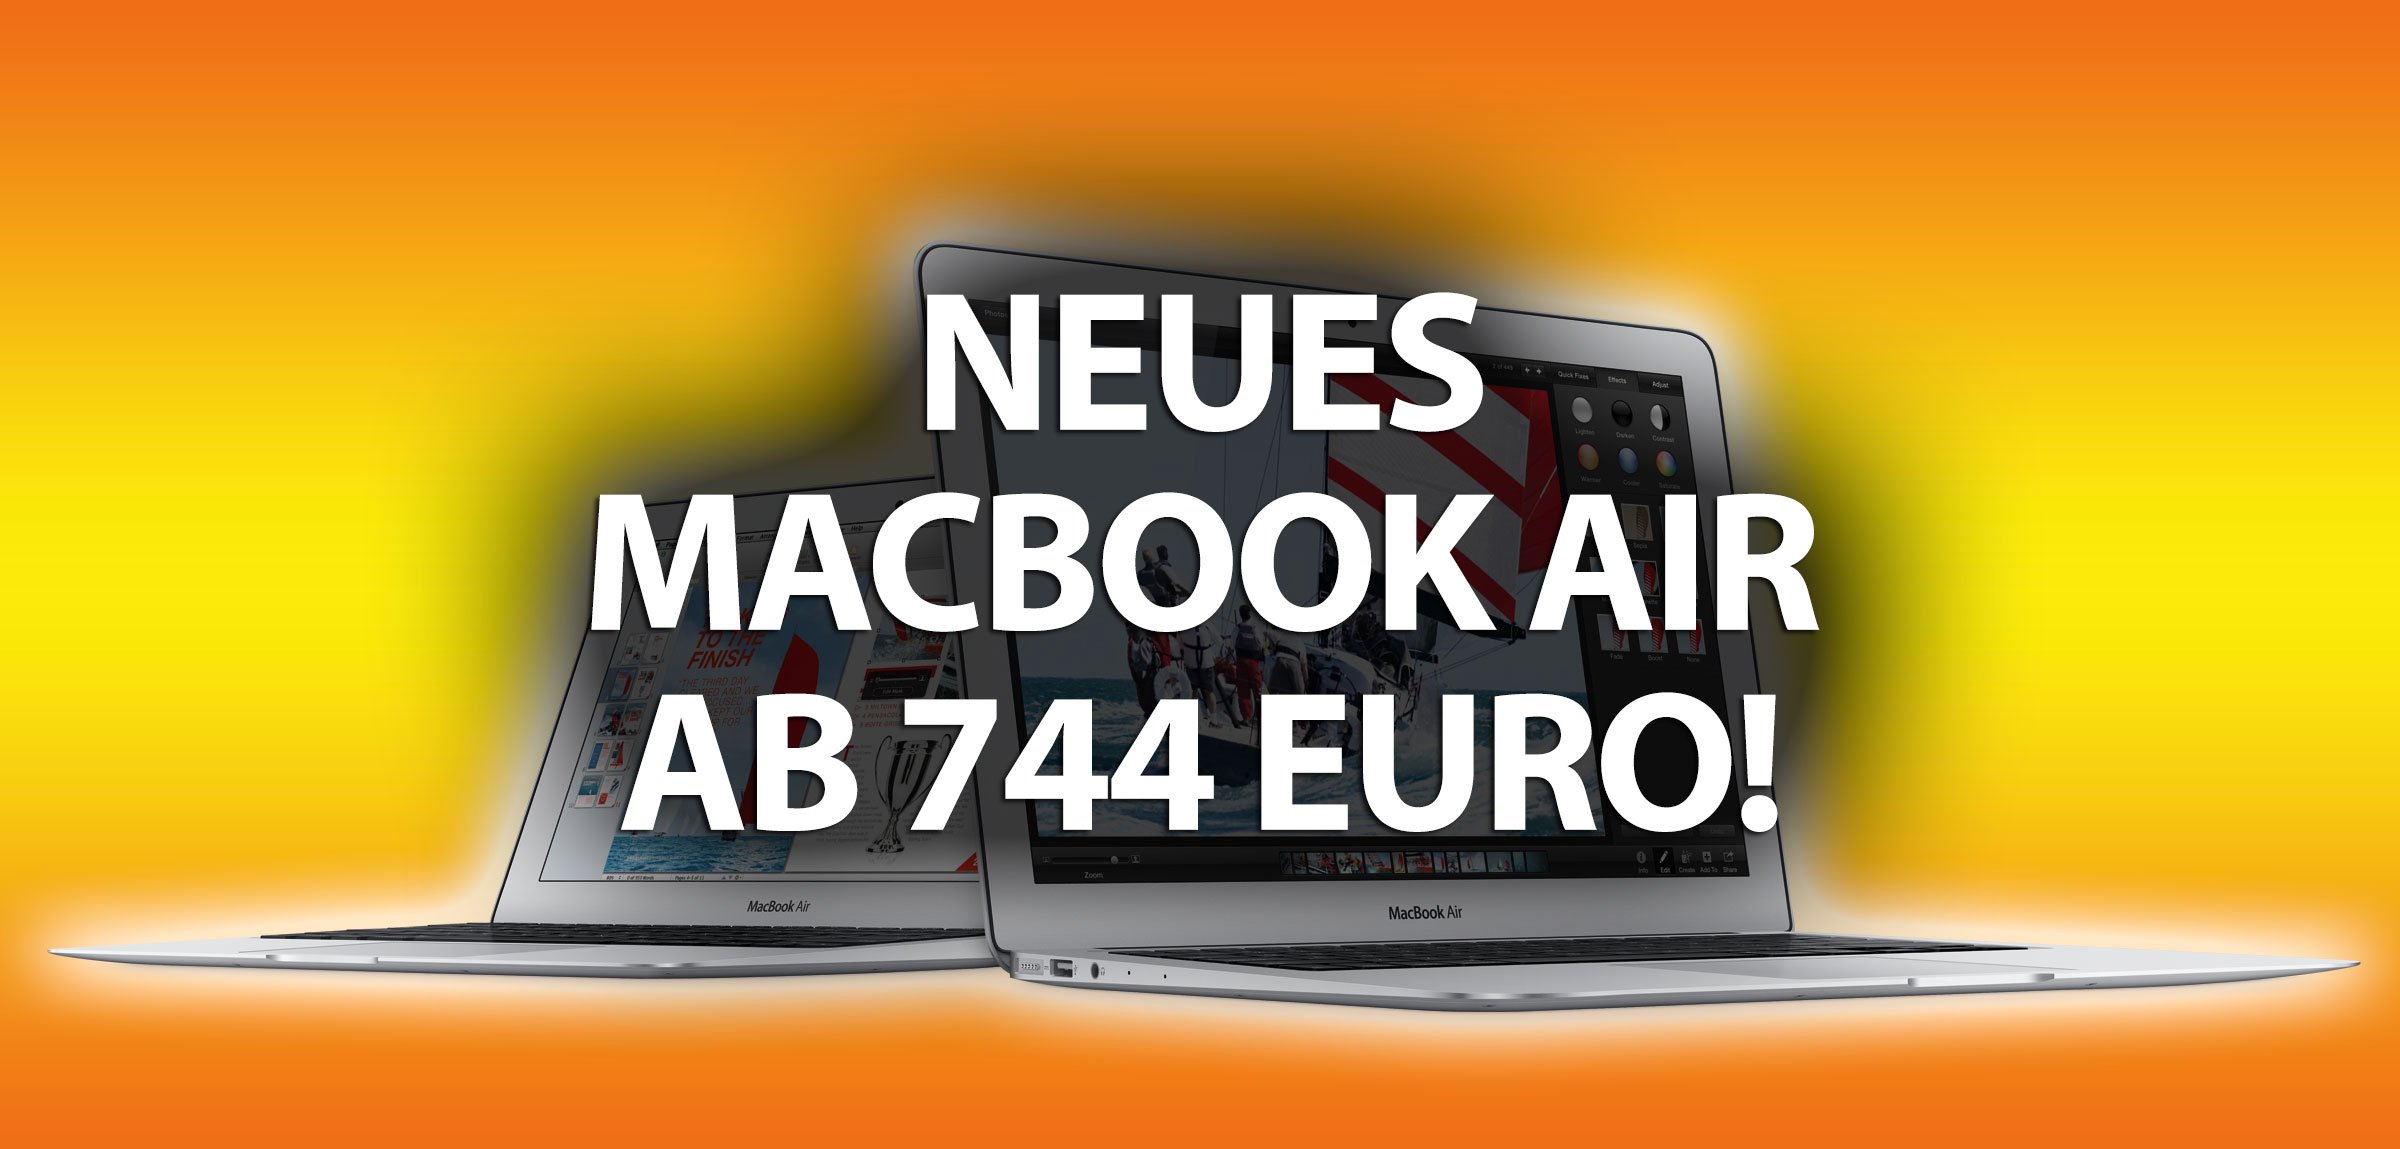 Neuer Rabattcode für Macbook Air 2014: Bester Preis! (Update: Studenten-Rabatt) 1